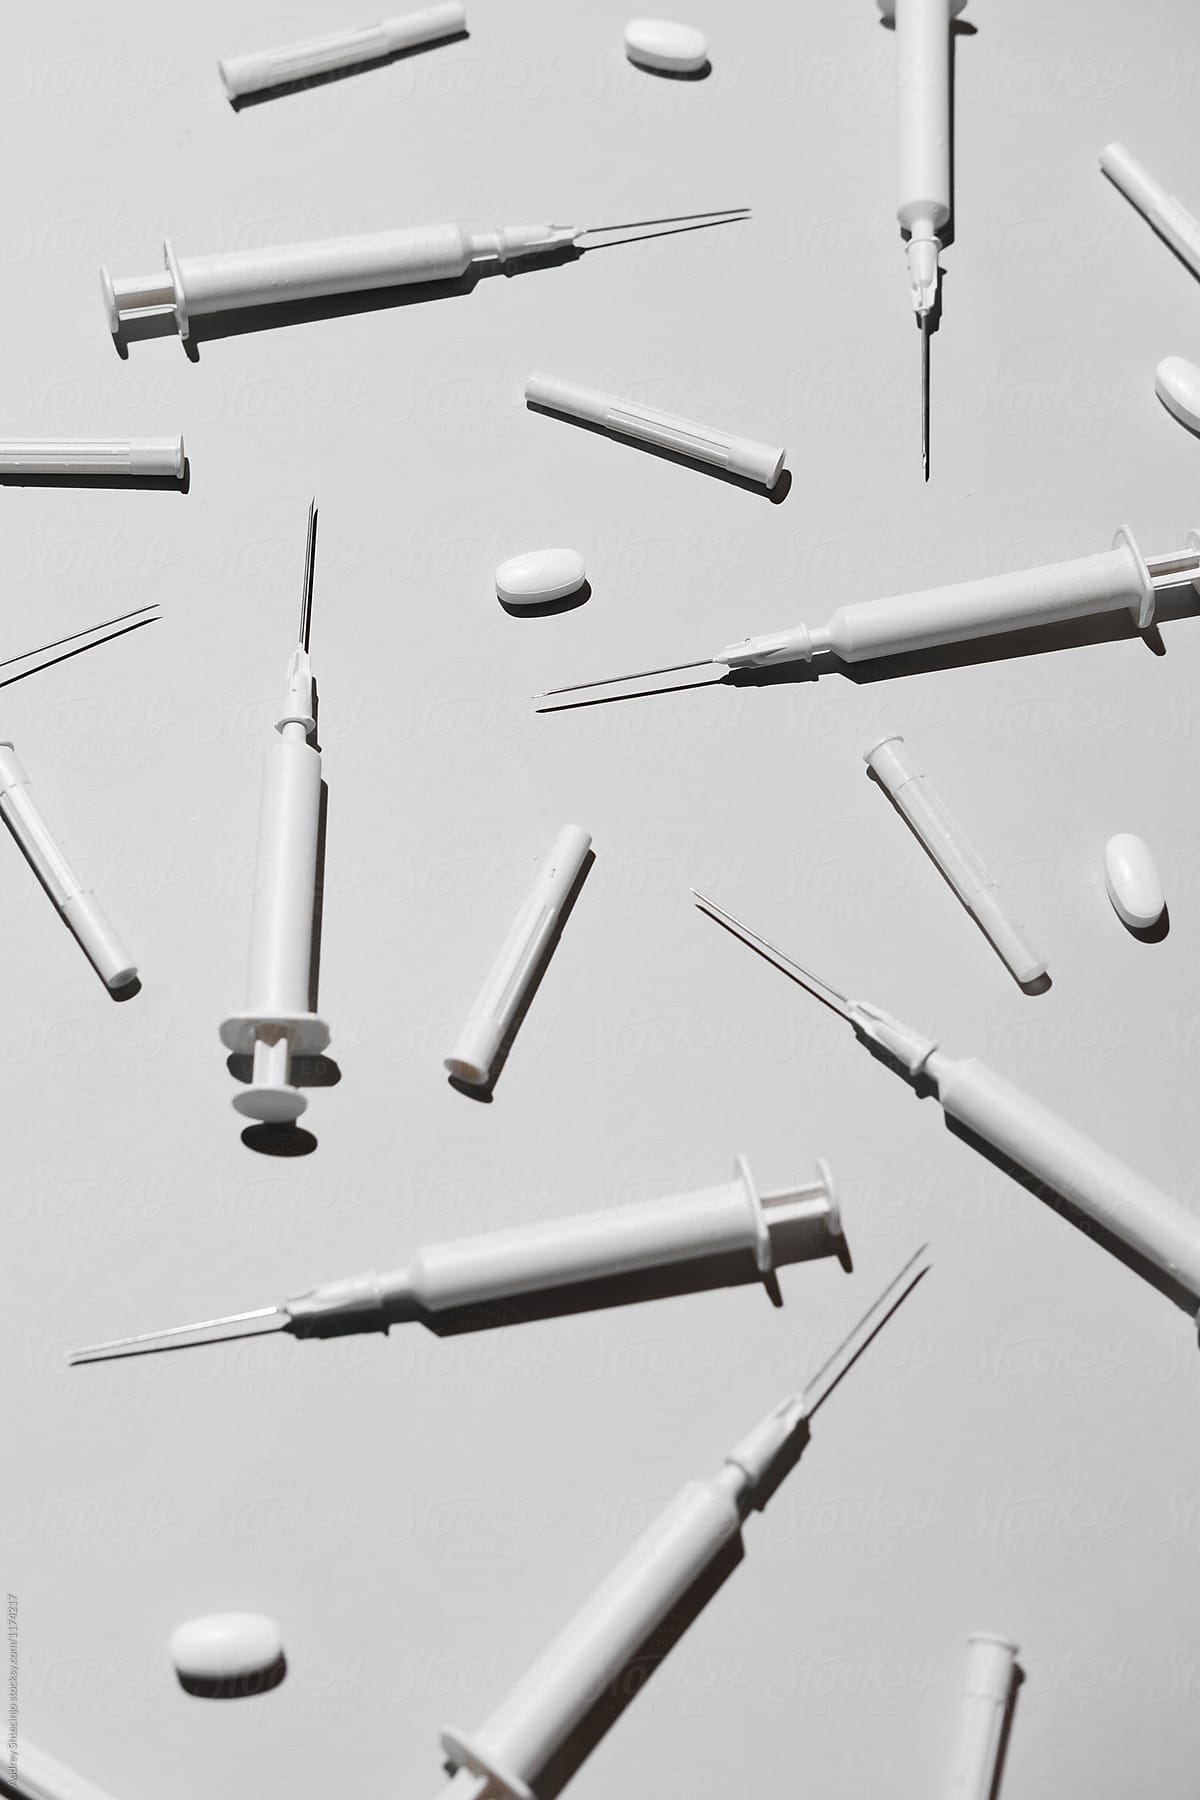 Blanc hypodermic needles adn pills on white background.